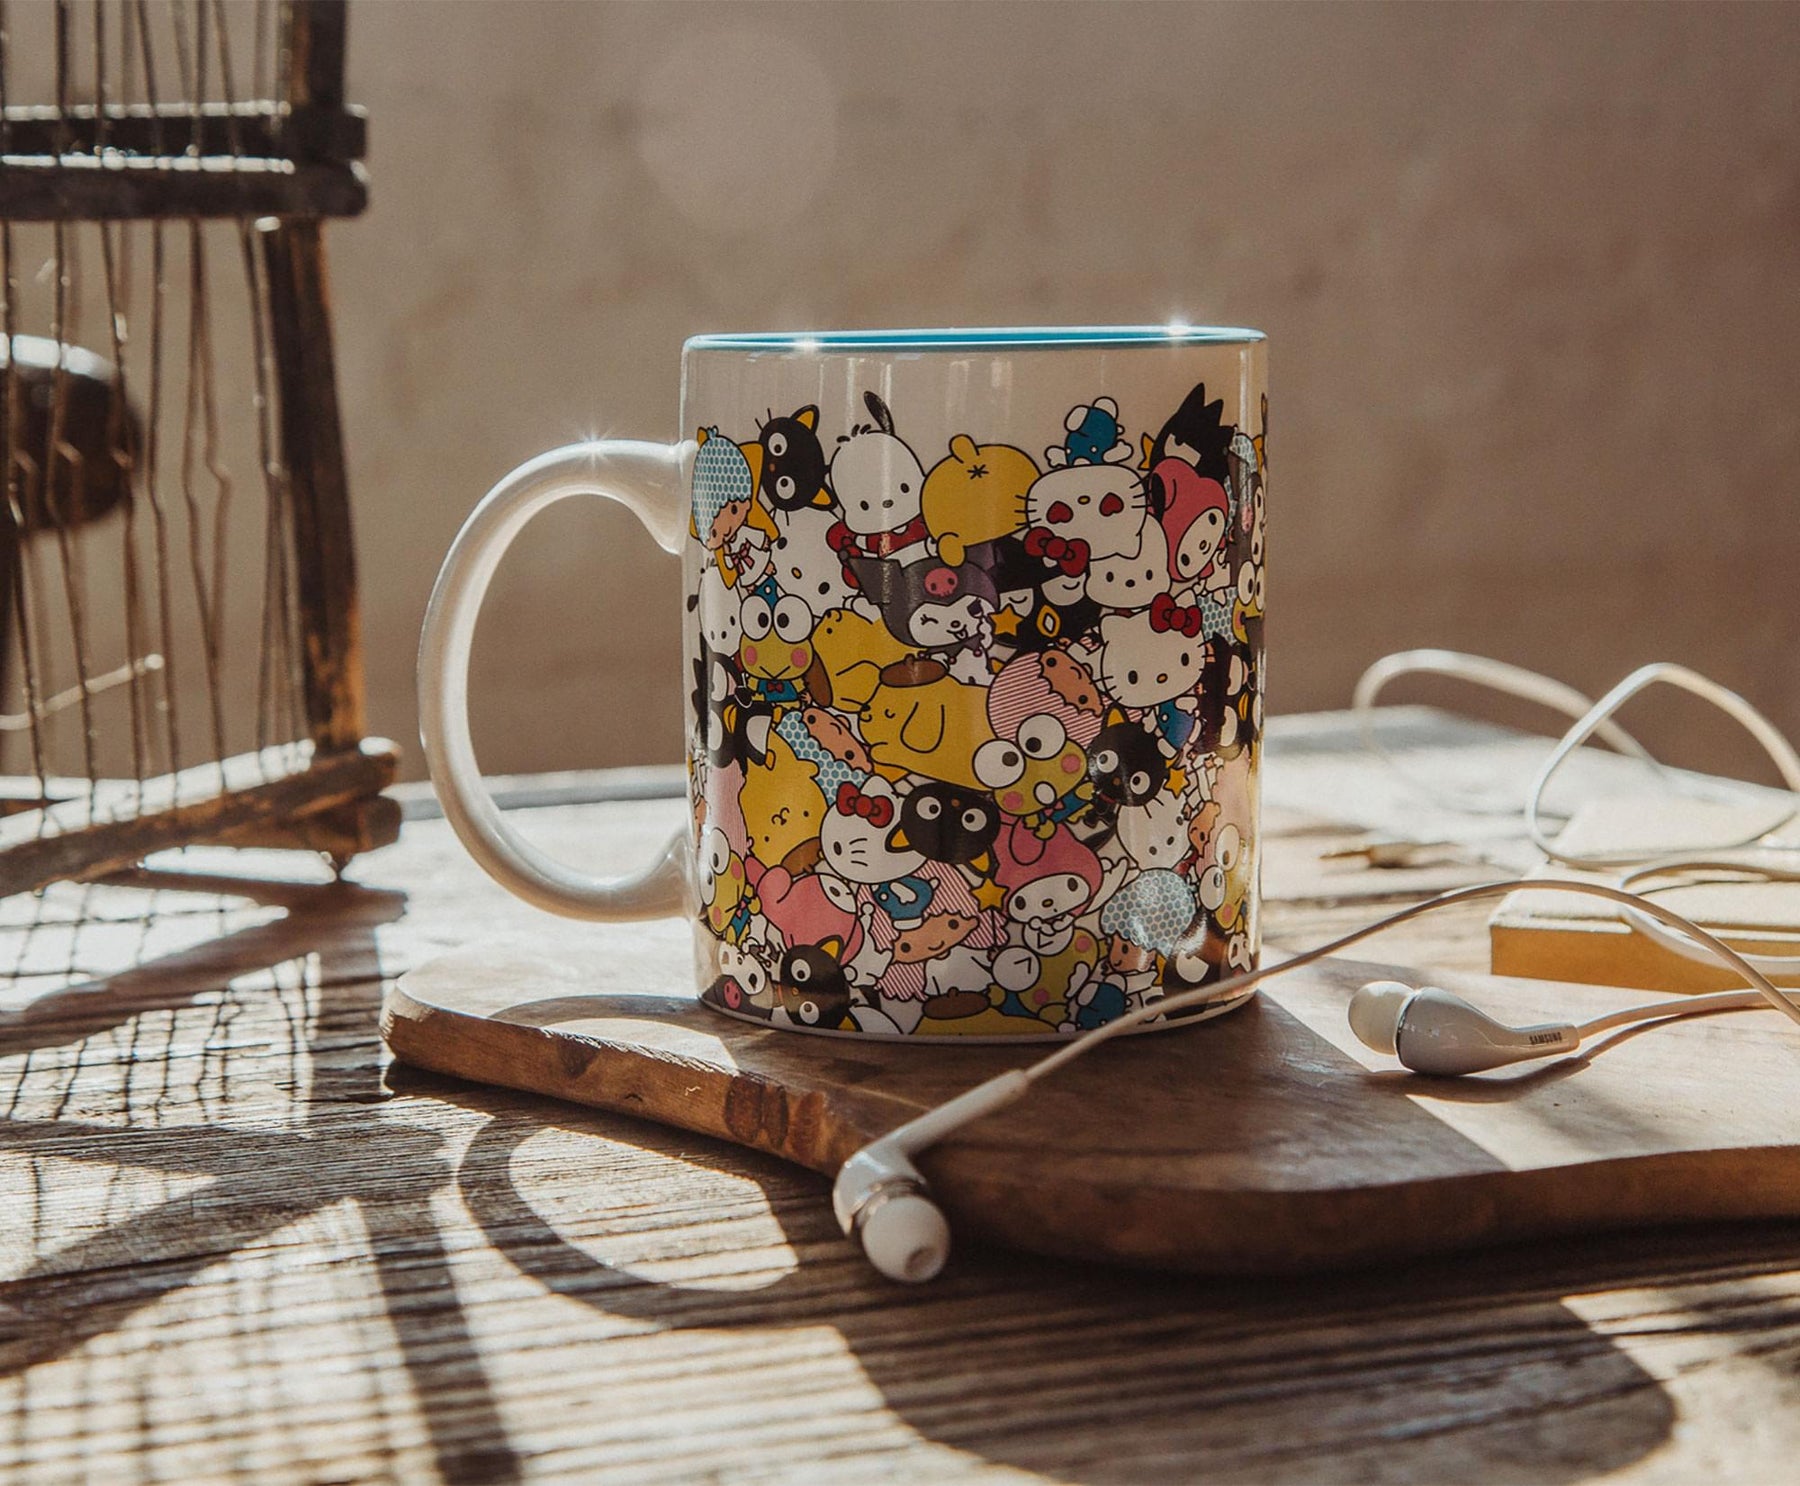 Sanrio Hello Kitty And Friends Ceramic Mug | Holds 20 Ounces